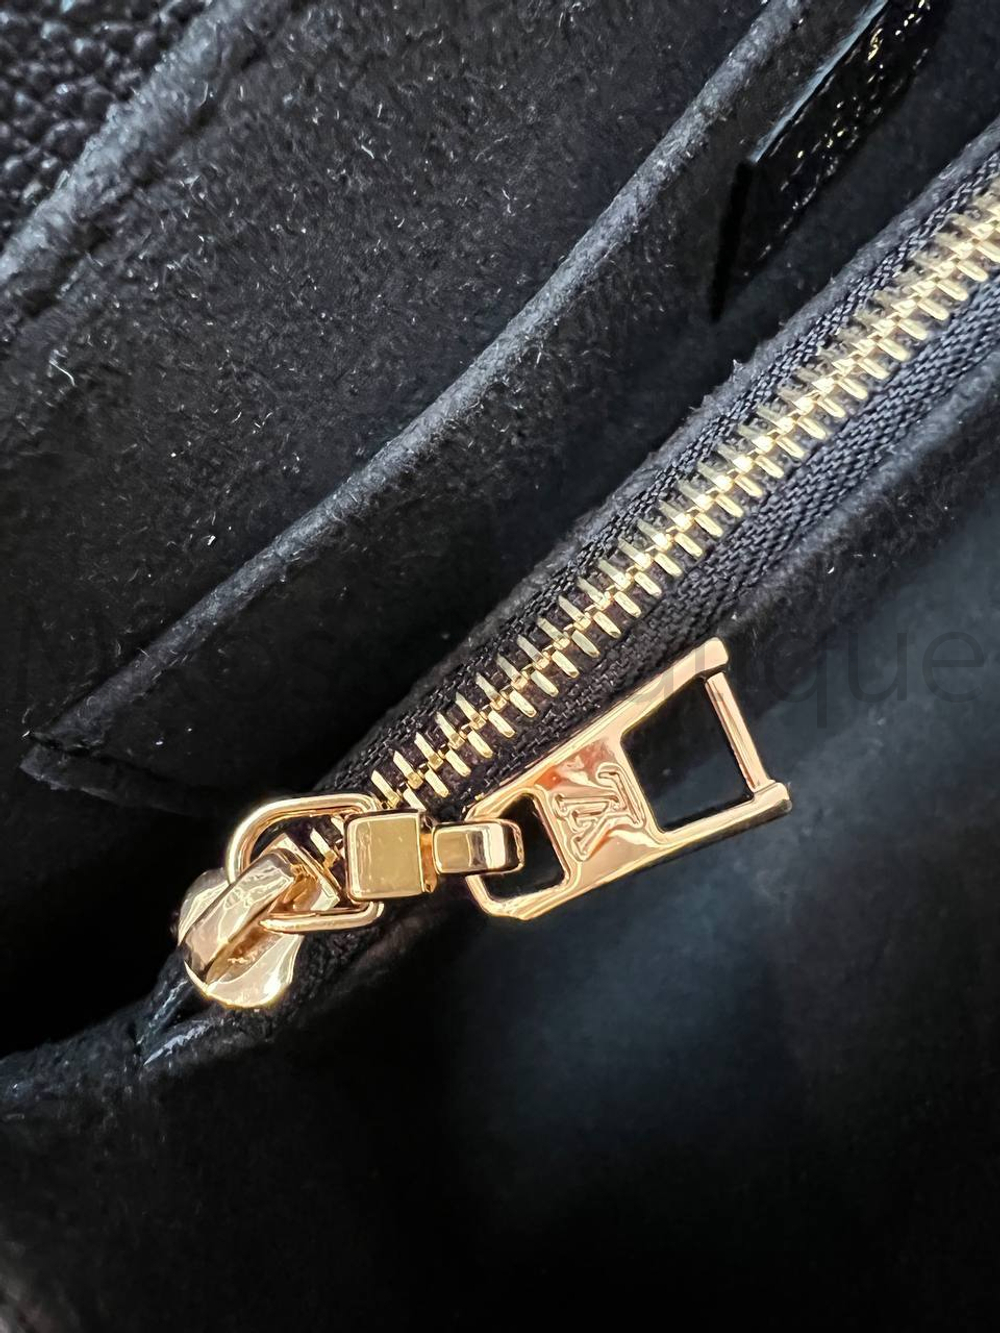 Черная сумка Madeleine Louis Vuitton (Луи Виттон) премиум класса